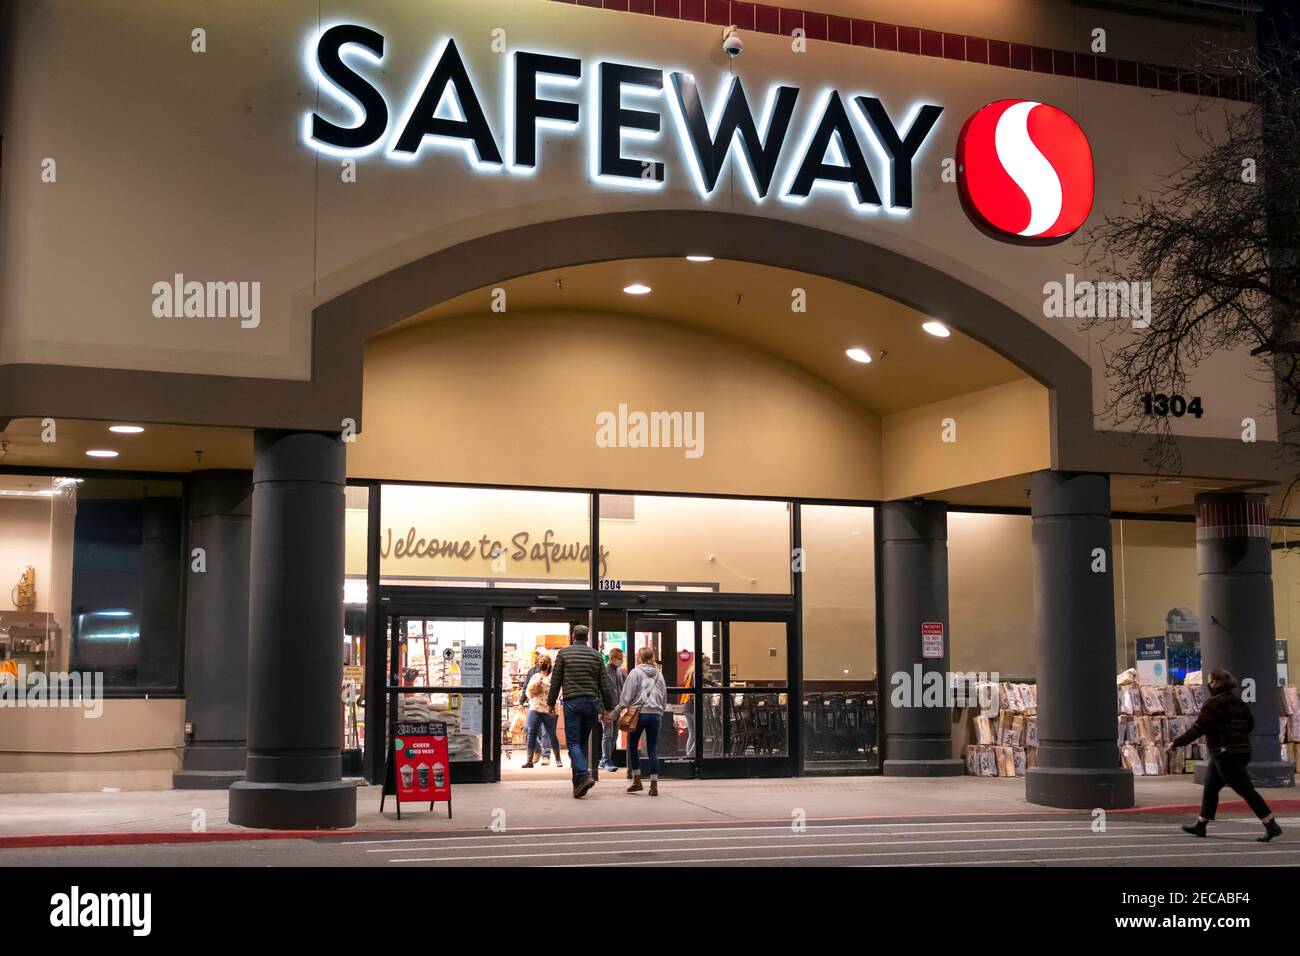 Shoppers enter an illuminated Safeway Supermarket Grocery store at night wearing masks due to Washington's mask mandate. Stock Photo